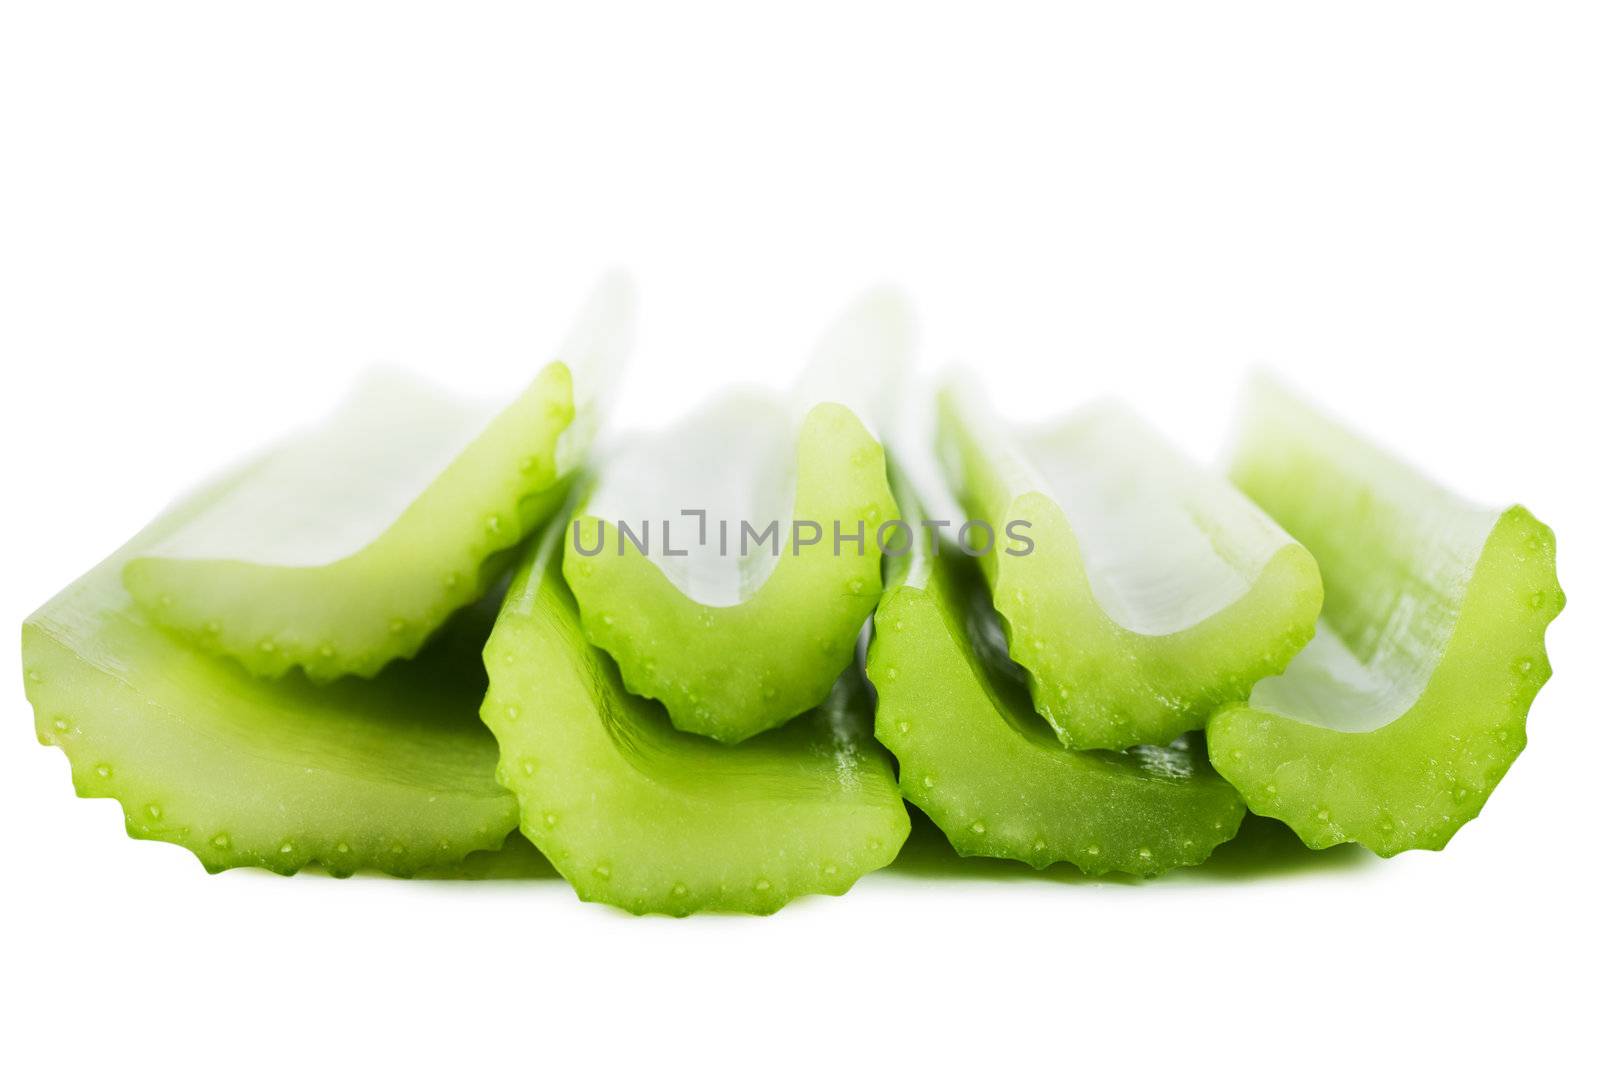 Fresh green stems of celery over white background